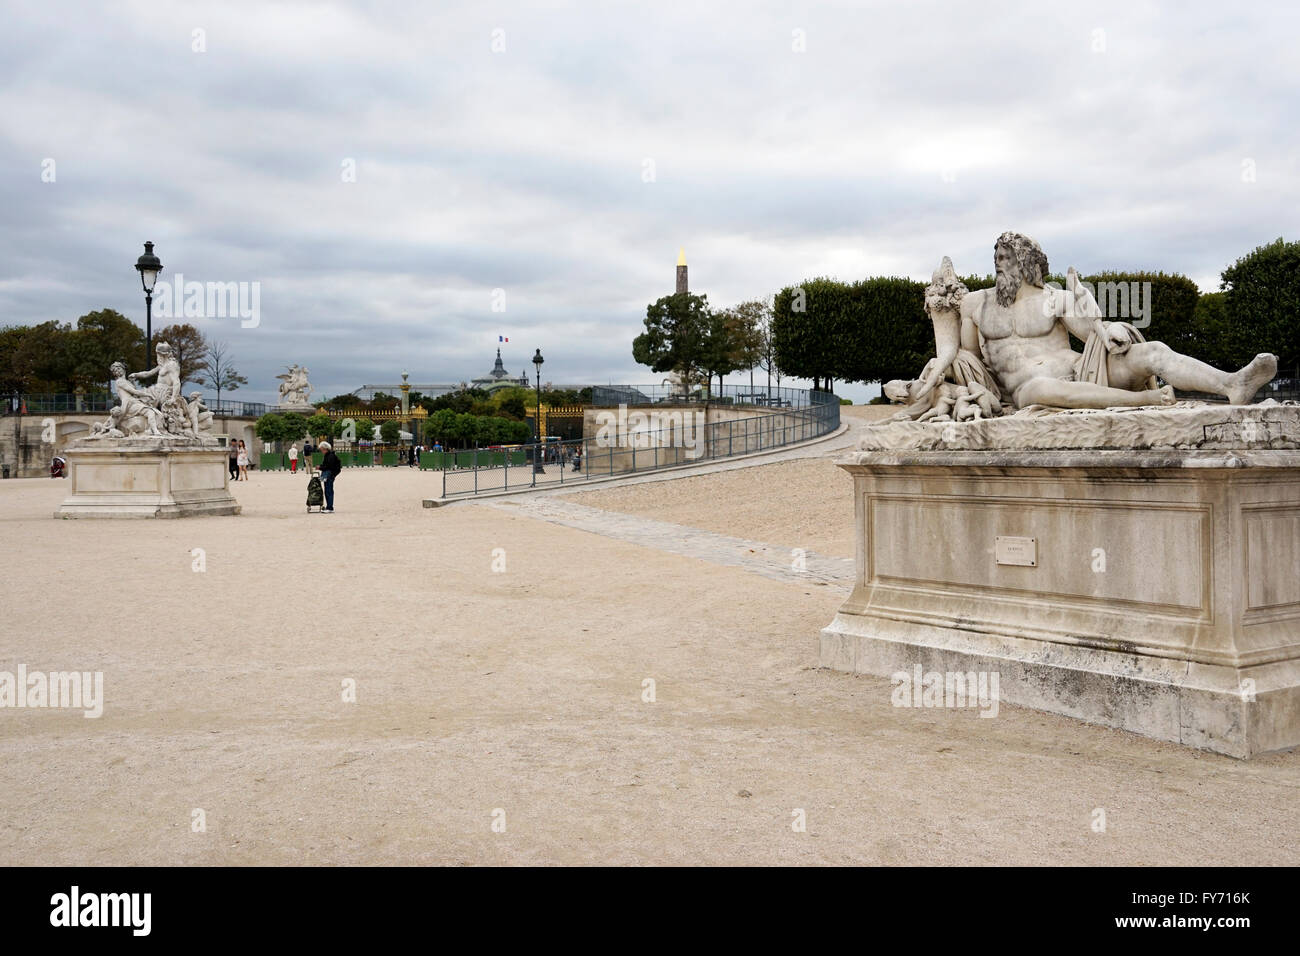 Tuileries Garden, Jardin des Tuileries with ancient sculptures in Paris. France Stock Photo